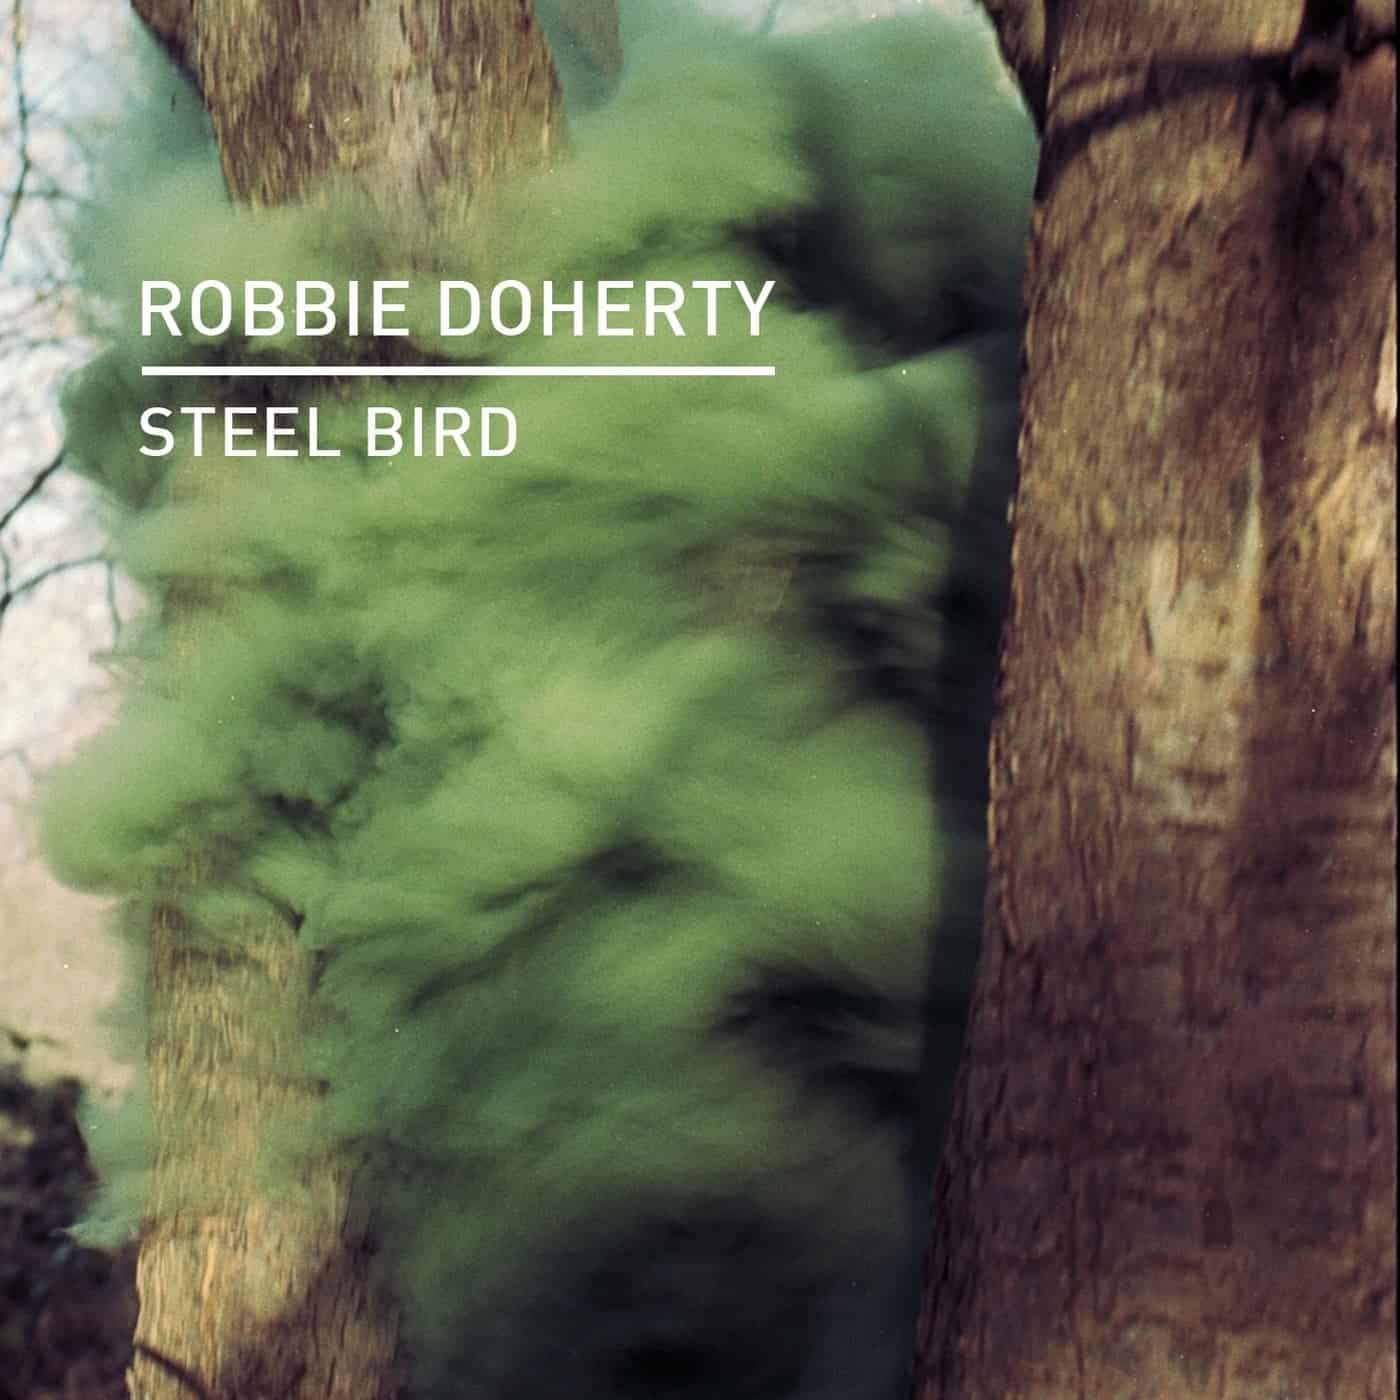 Download Robbie Doherty - Steel Bird on Electrobuzz